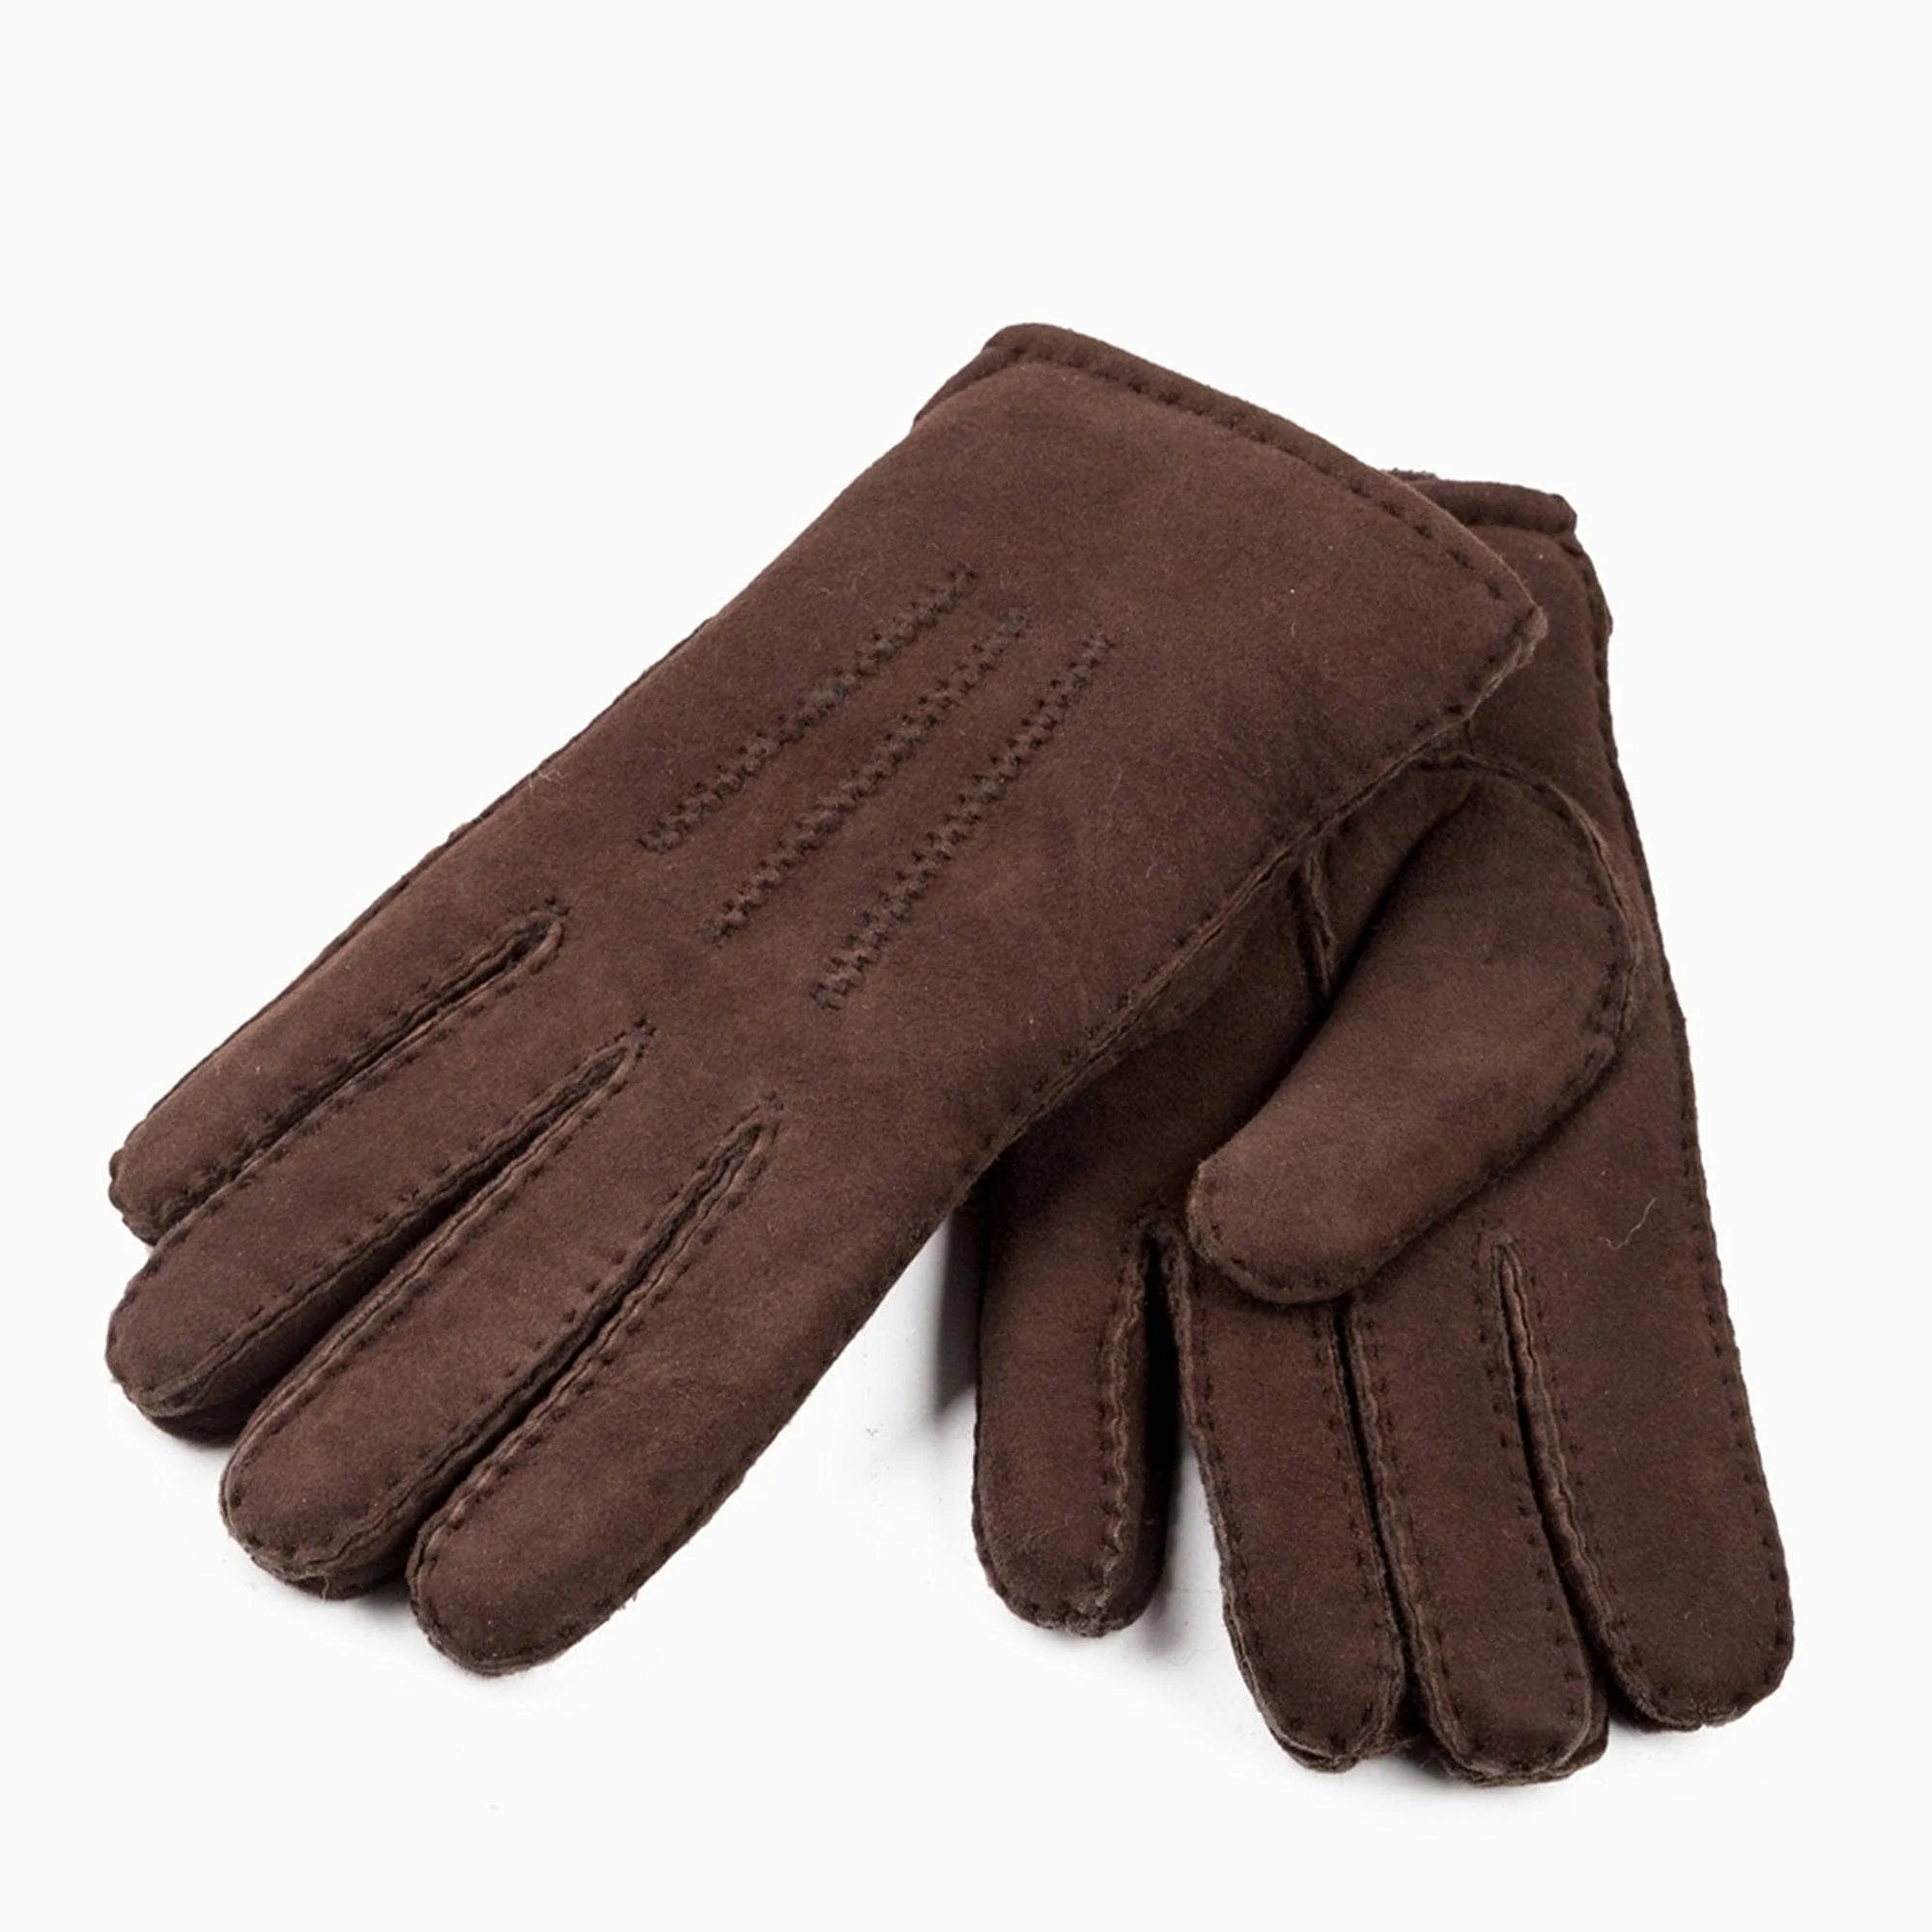  - UGG Premium Men's Sheepskin Gloves - Original UGG Australia Classic